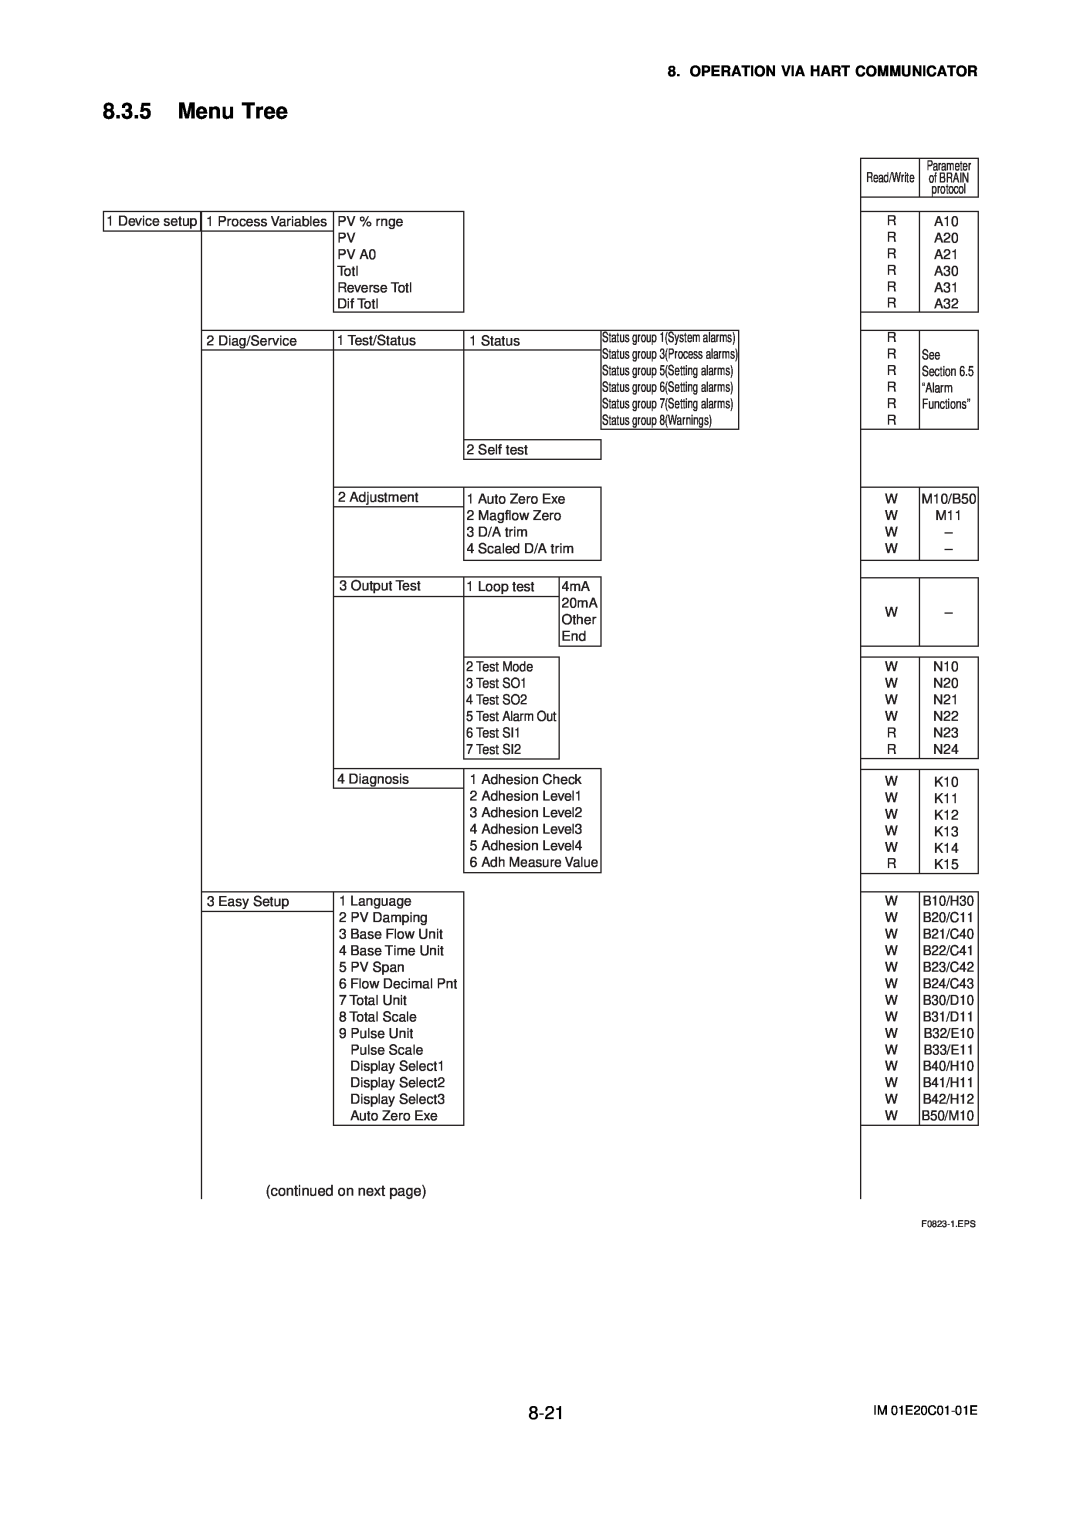 APC AXFA11G user manual Menu Tree, Operation Via Hart Communicator, continued on next page 